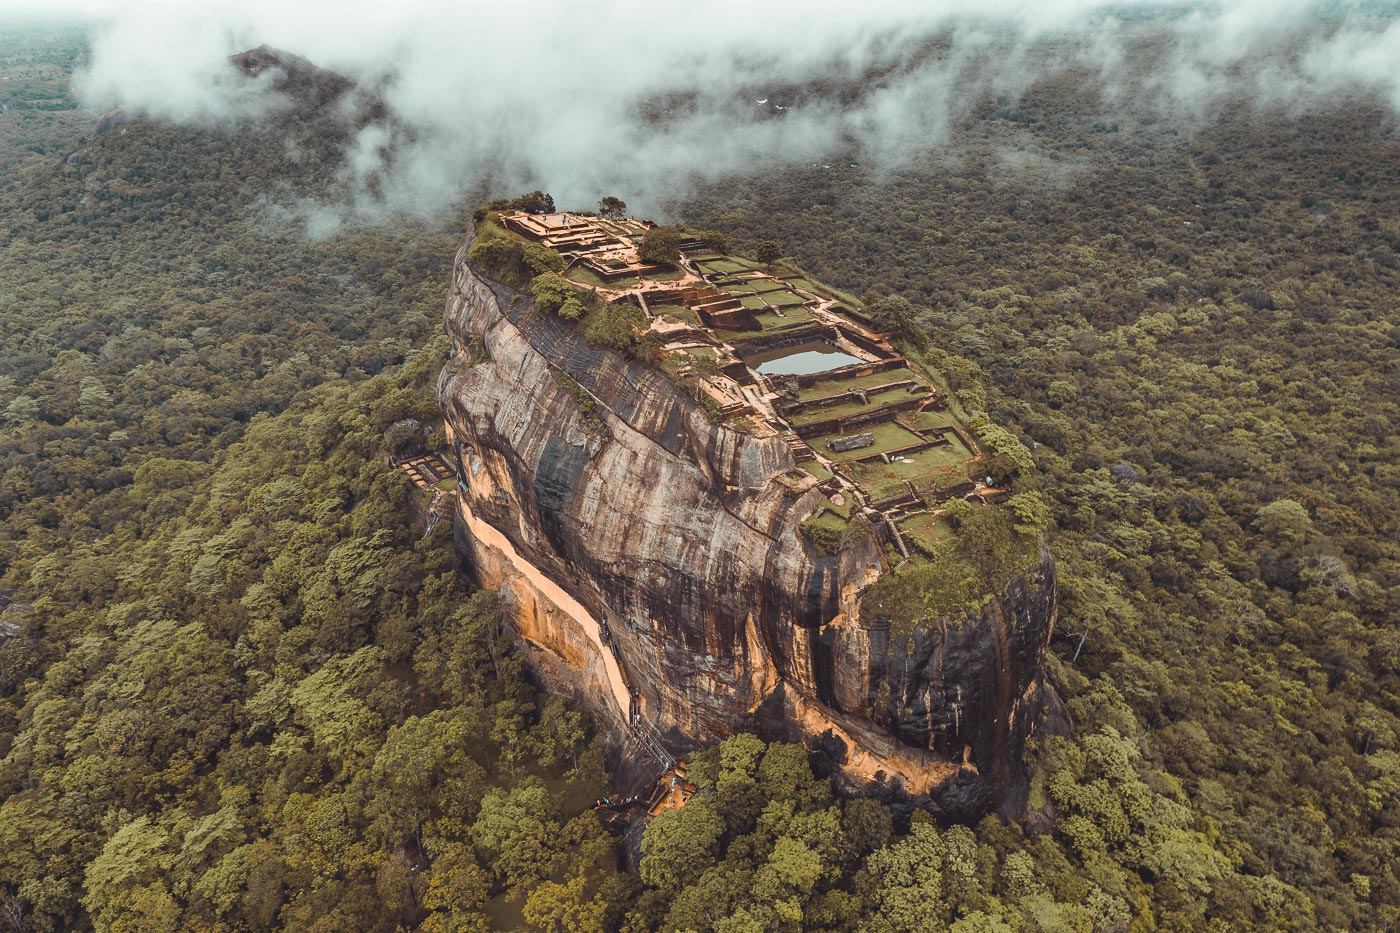 Sigiriya Rock Fortress Sri Lanka